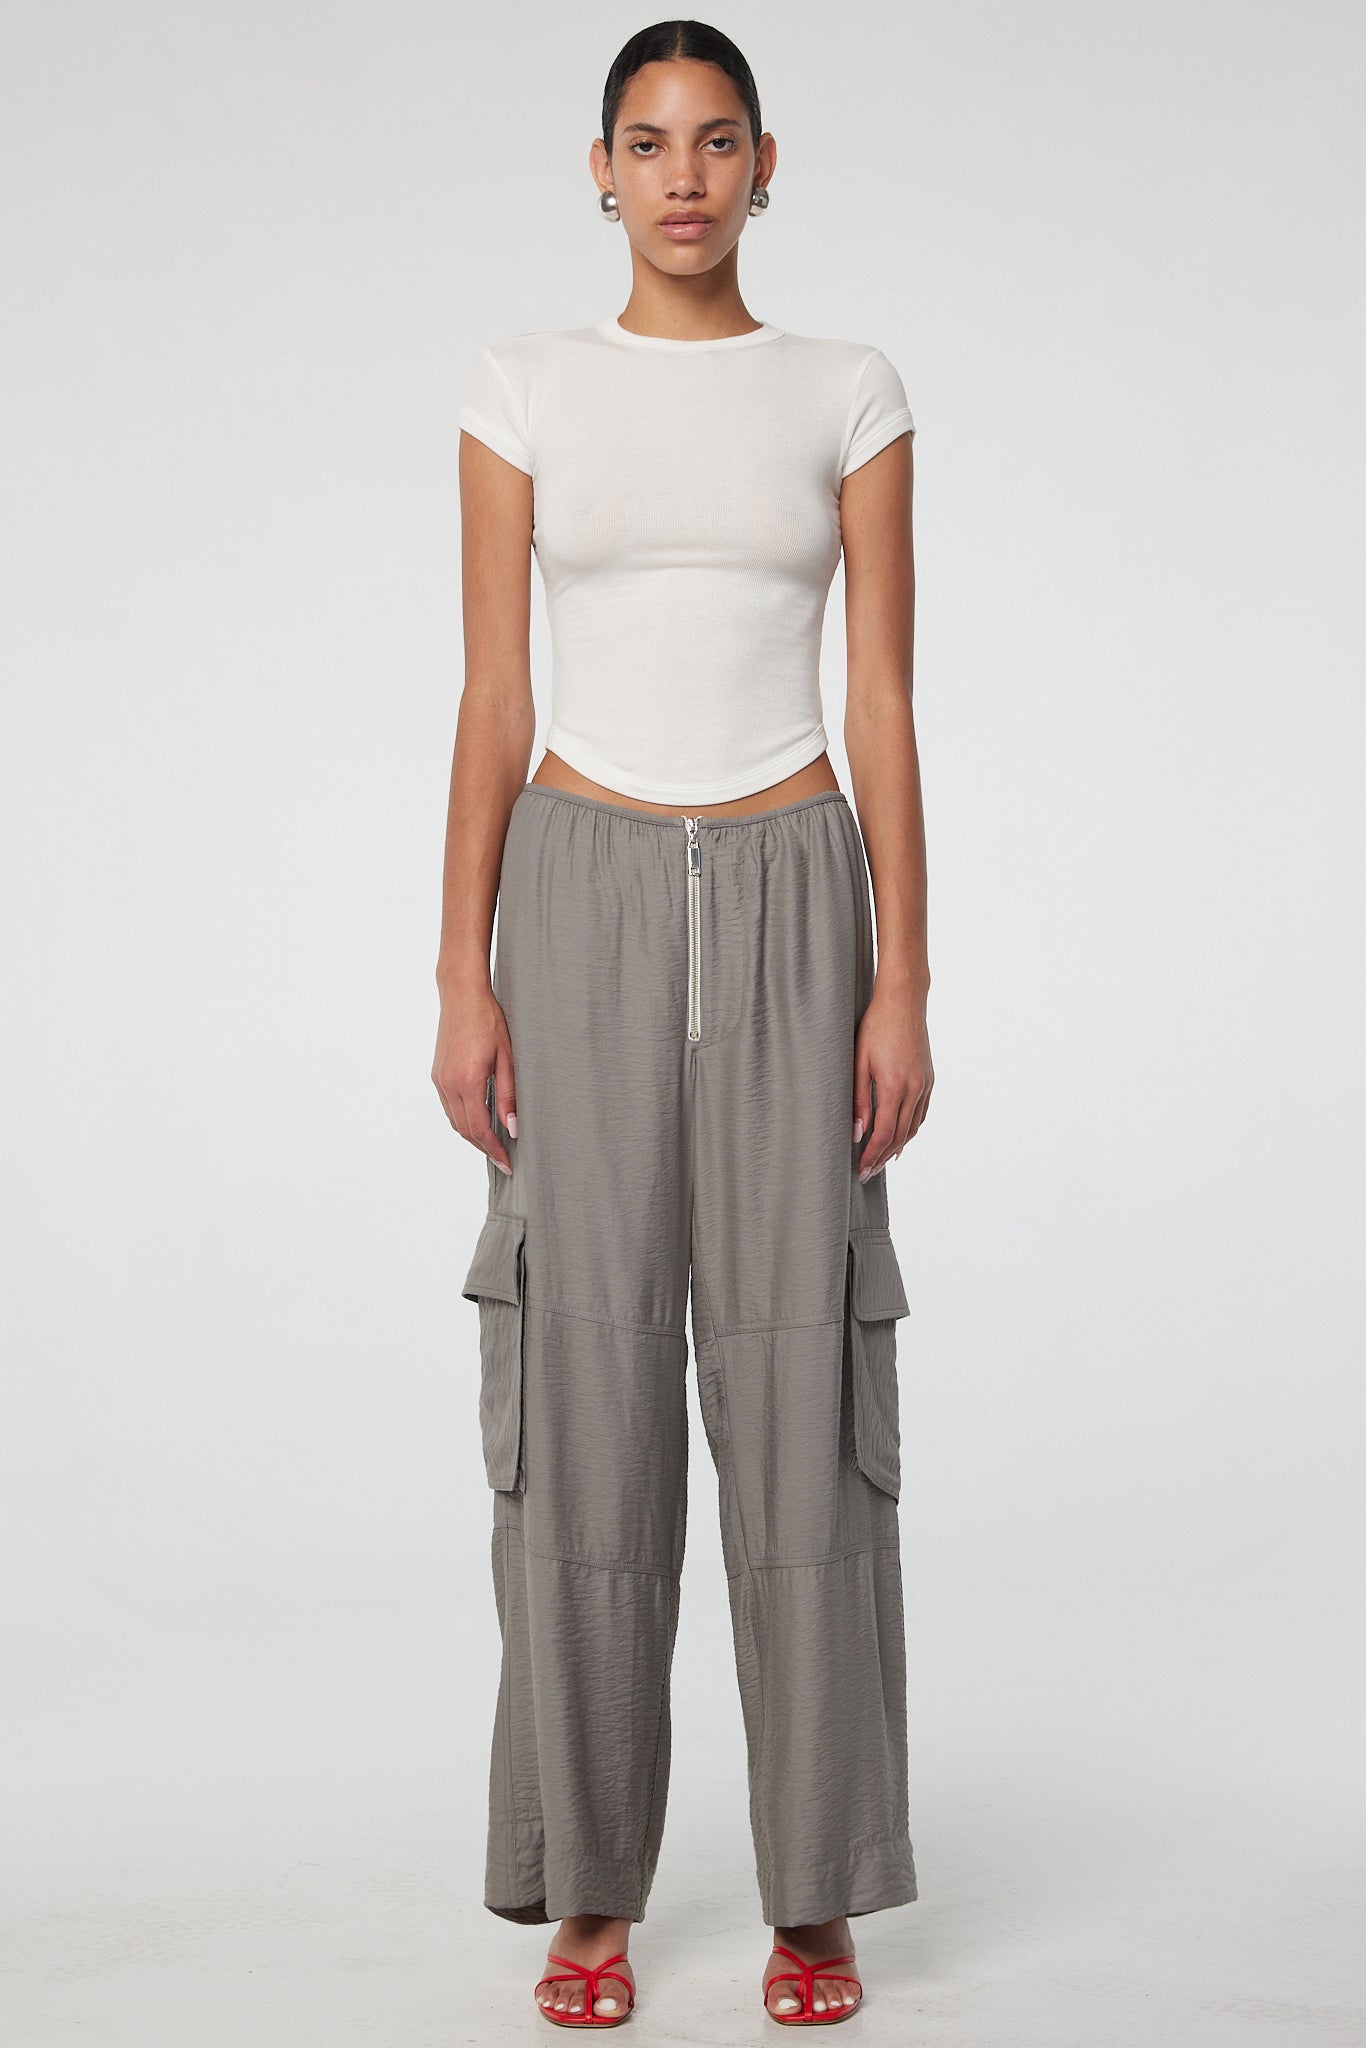 Women's Cargo Graphic Pants - Gray XS